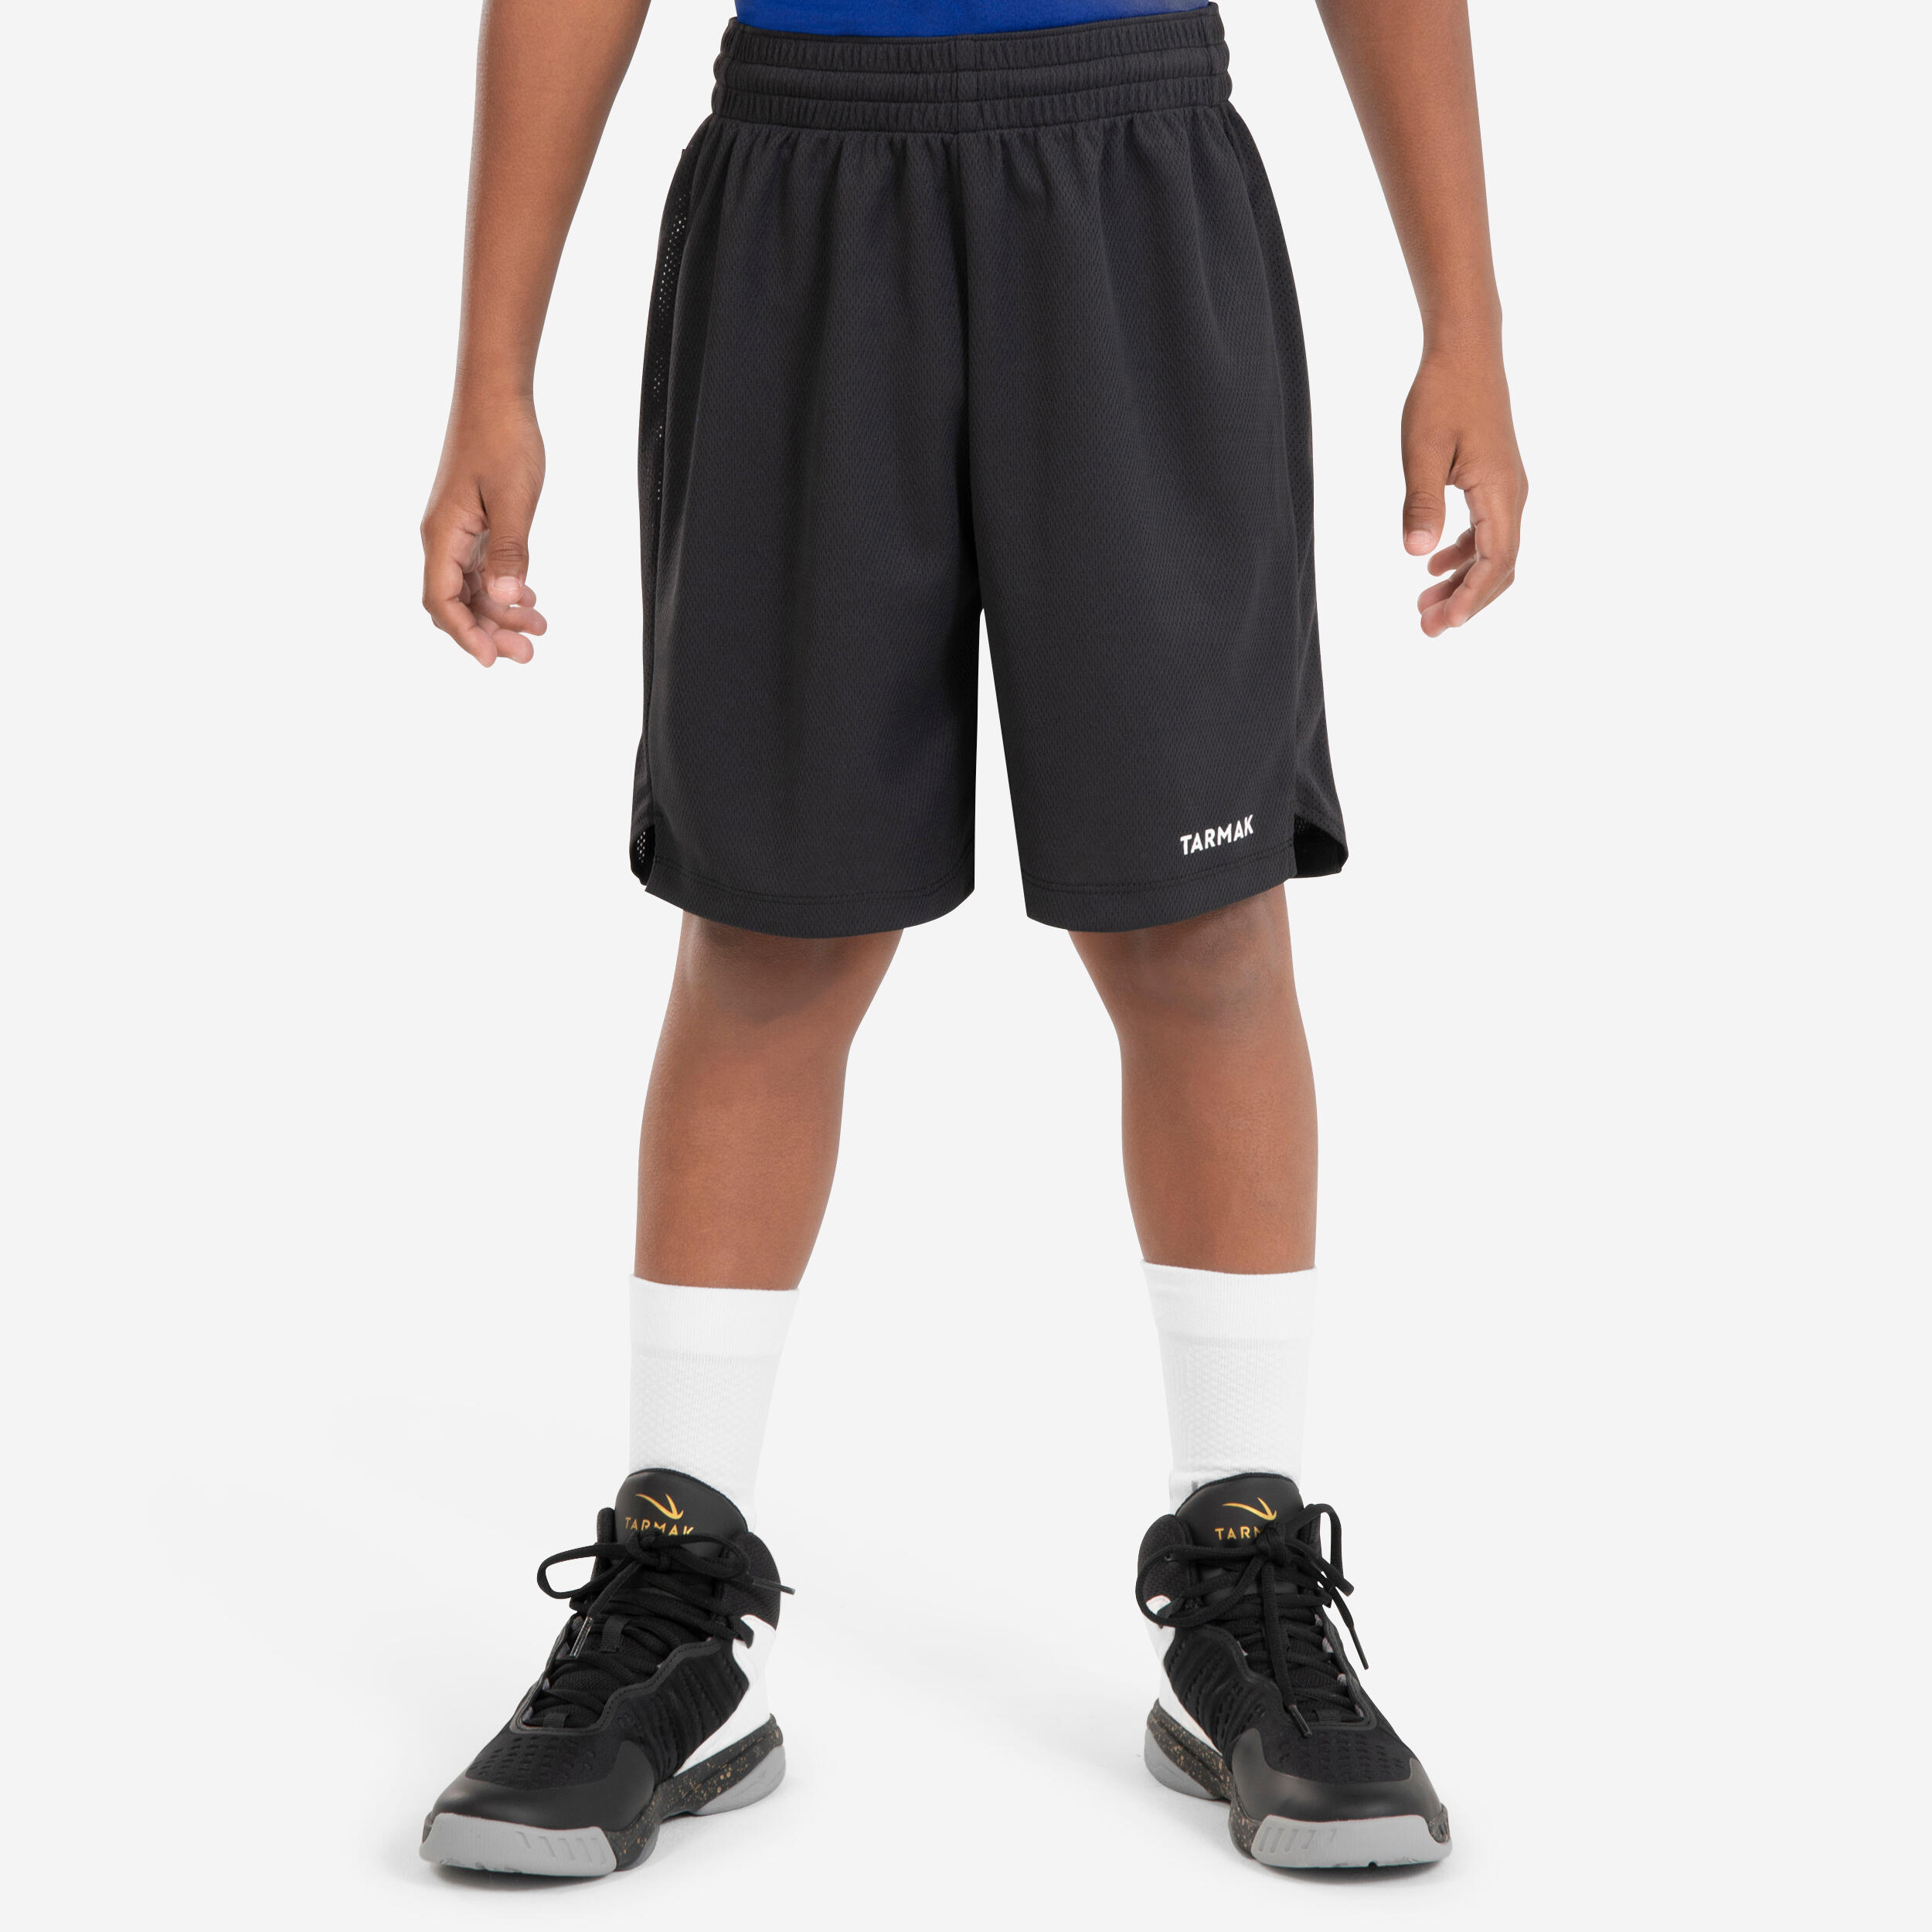 Reversible Basketball Shorts - SH 500 Black/Red